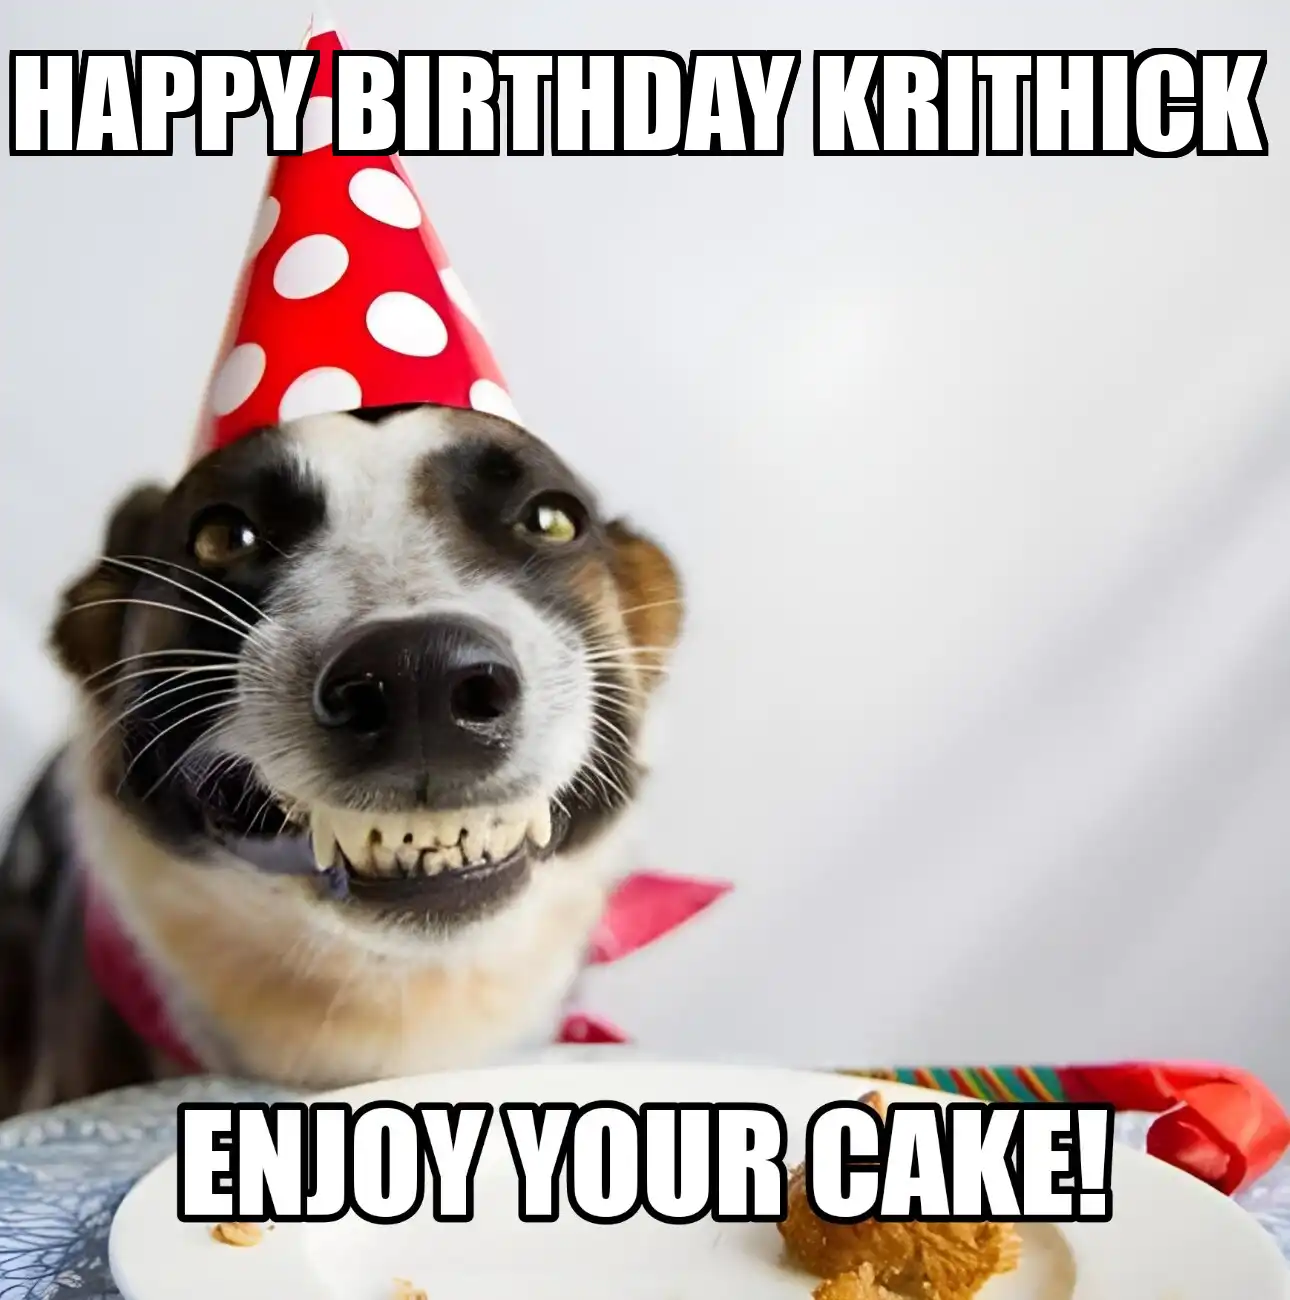 Happy Birthday Krithick Enjoy Your Cake Dog Meme